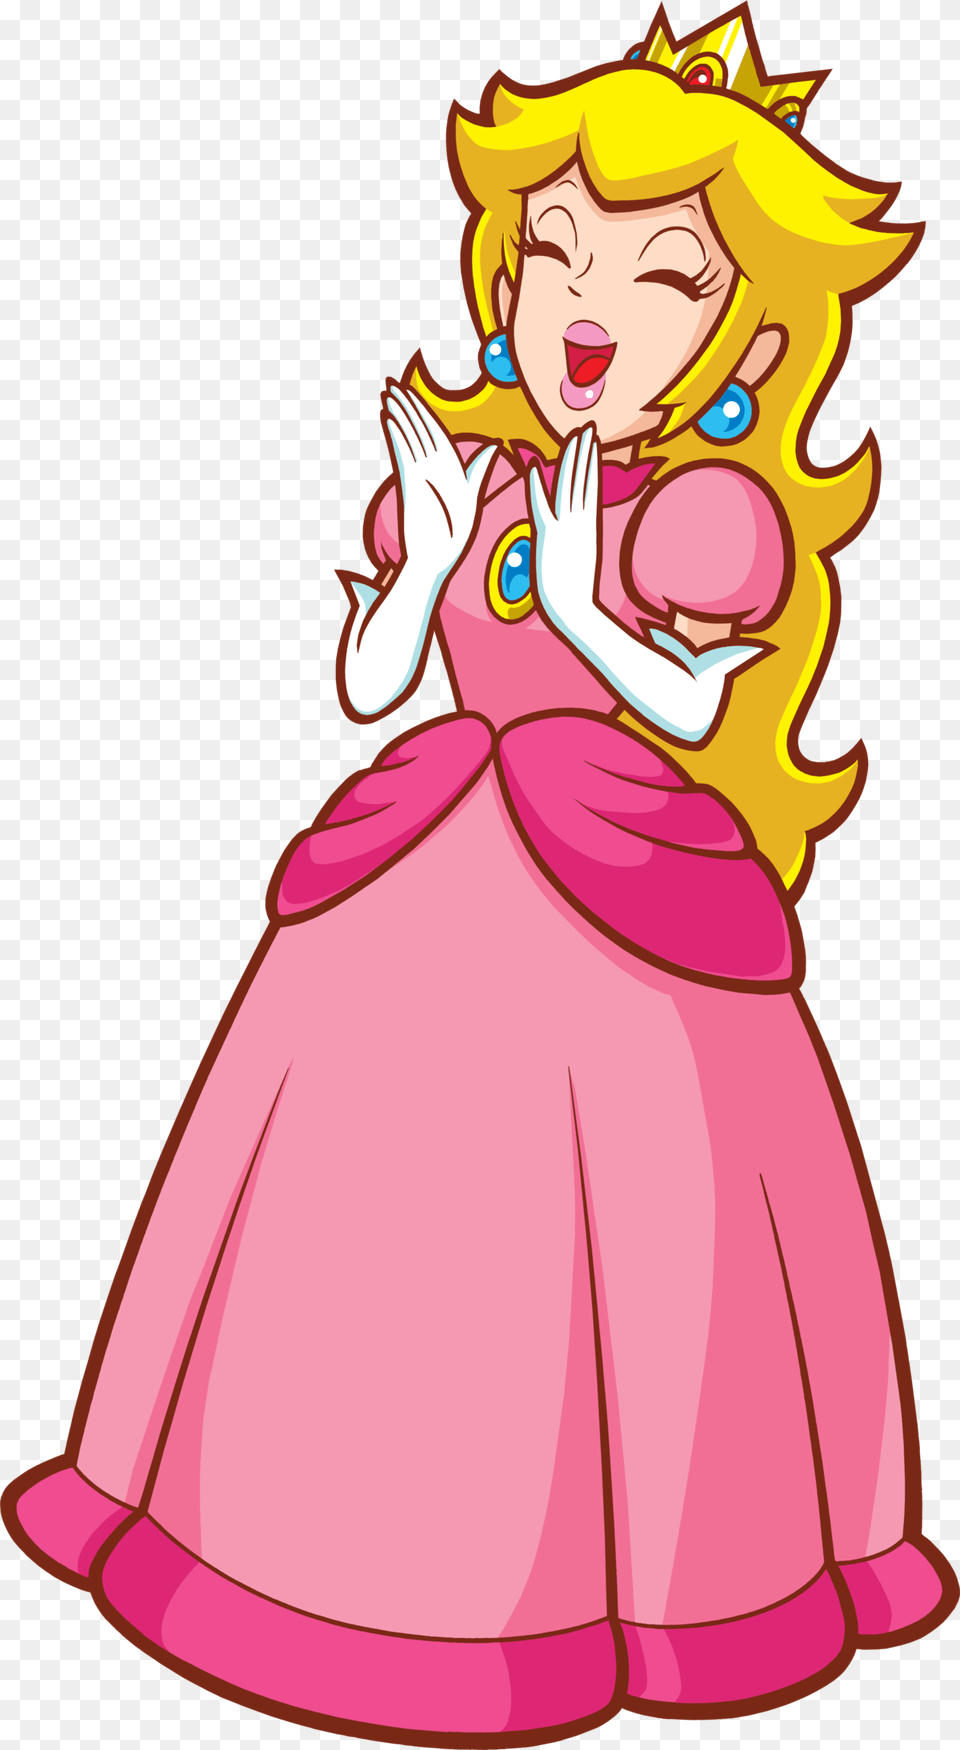 Super Princess Peach, Person, Cartoon, Face, Head Png Image